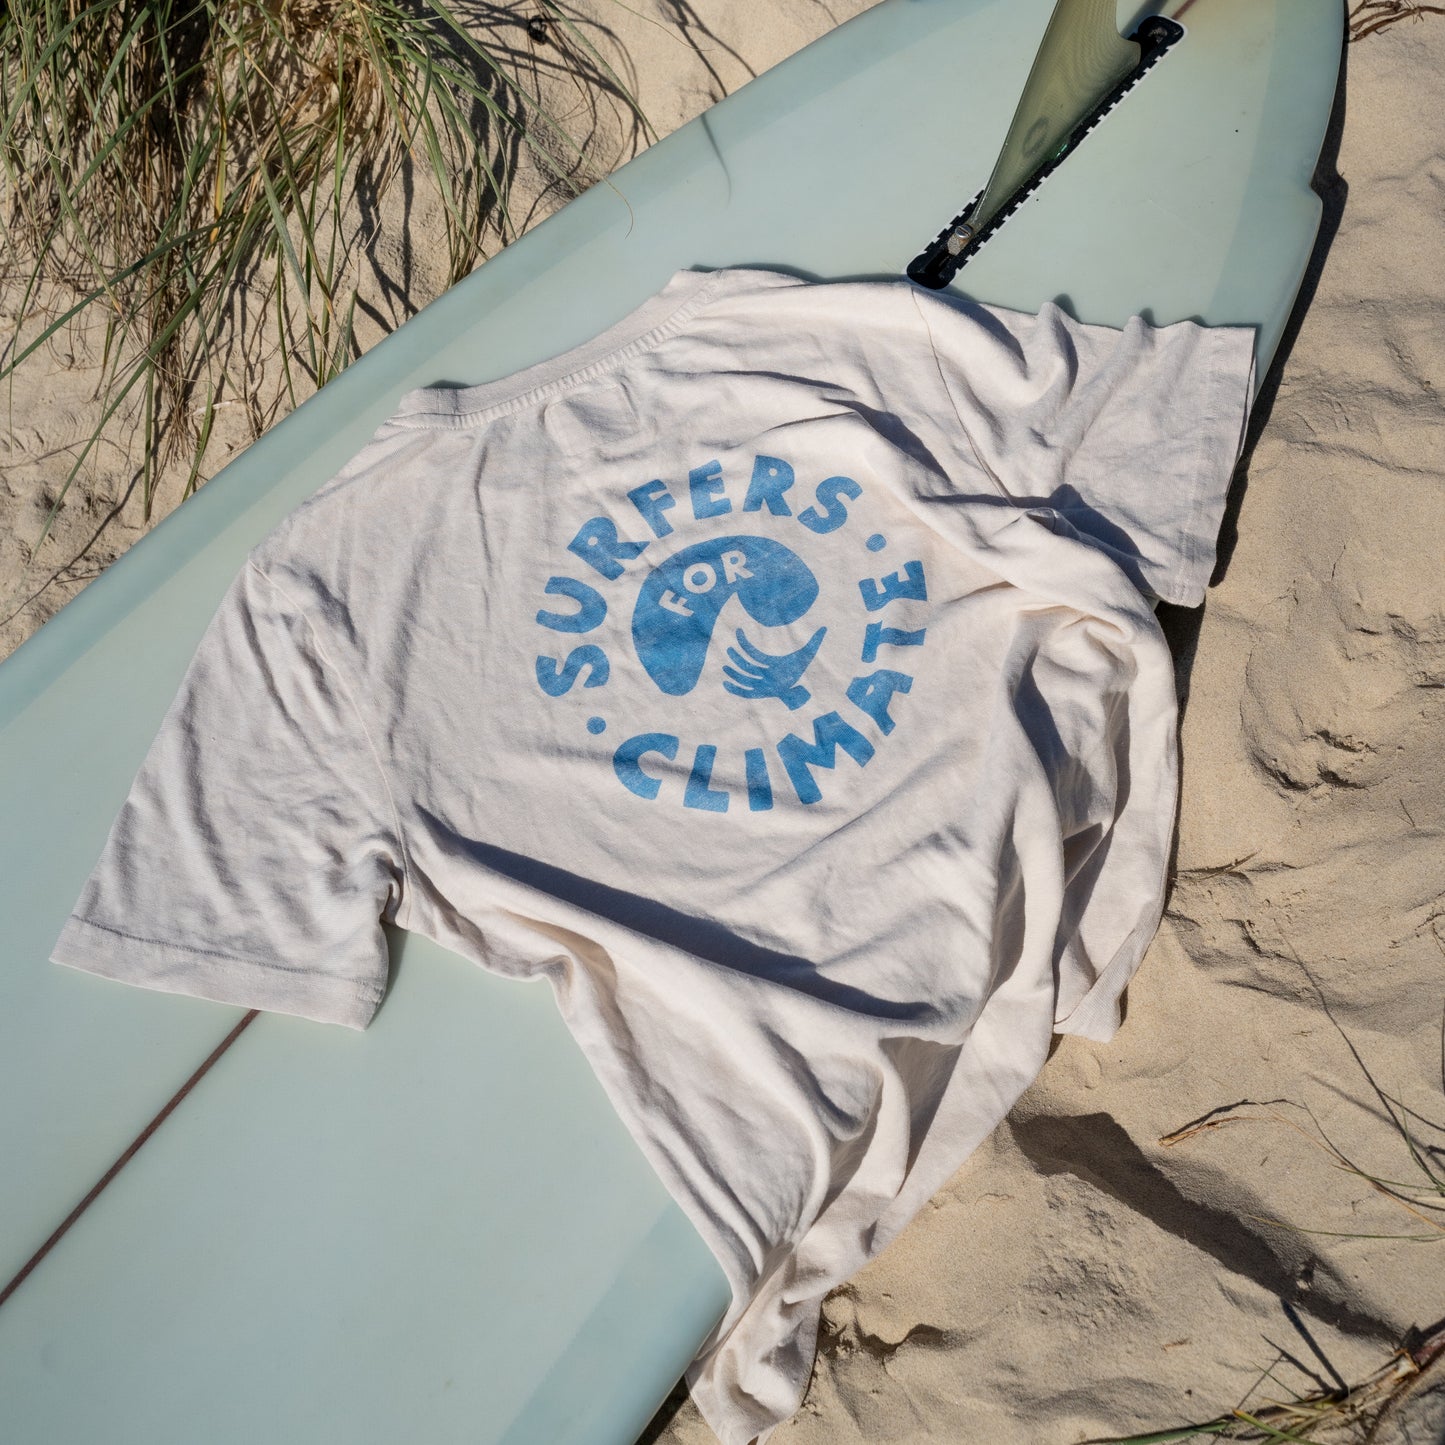 Surfers for Climate Organic Hemp Tee